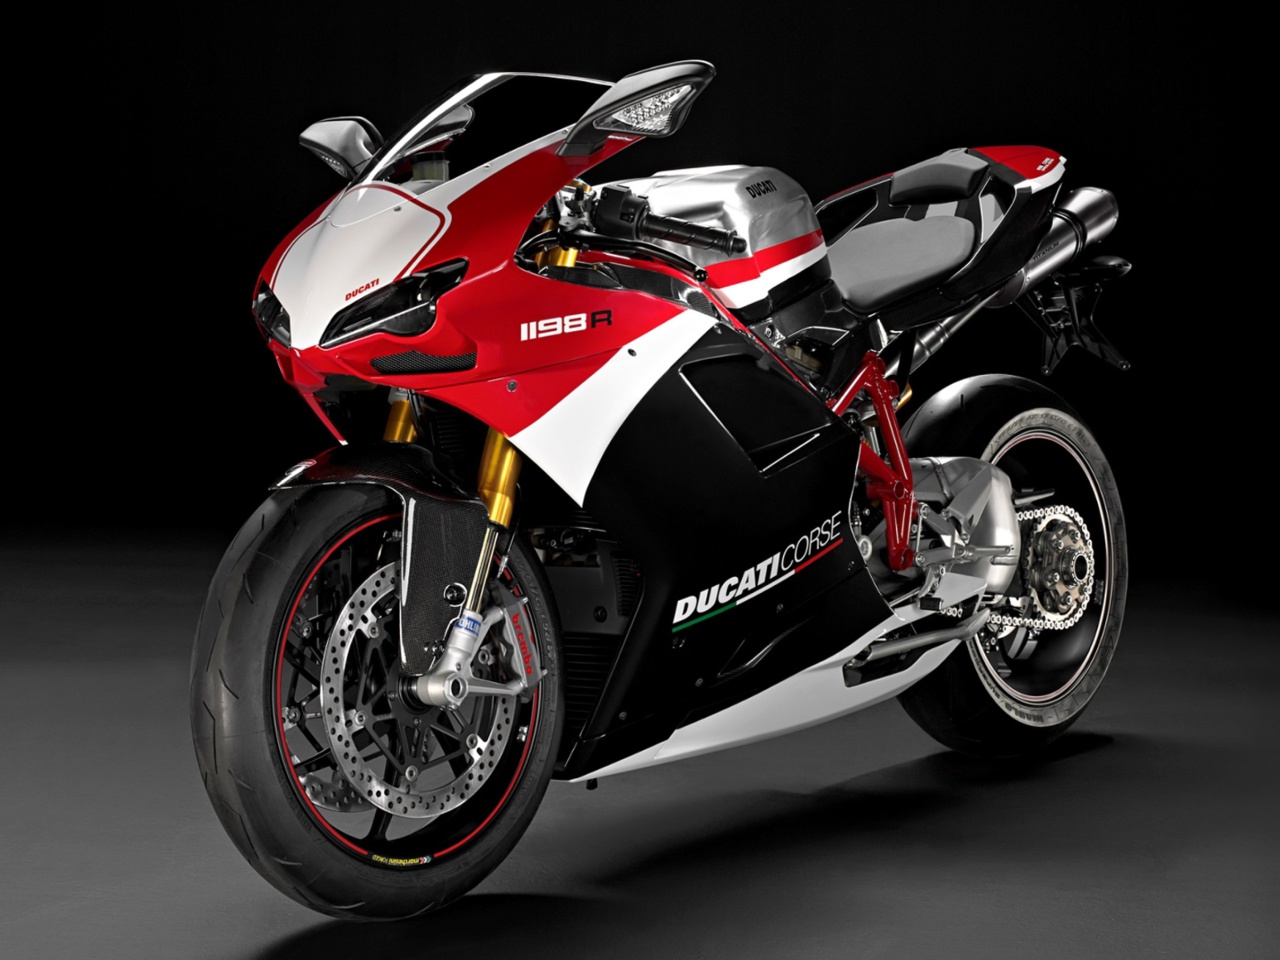 Das Superbike Ducati 1198 R Wallpaper 1280x960